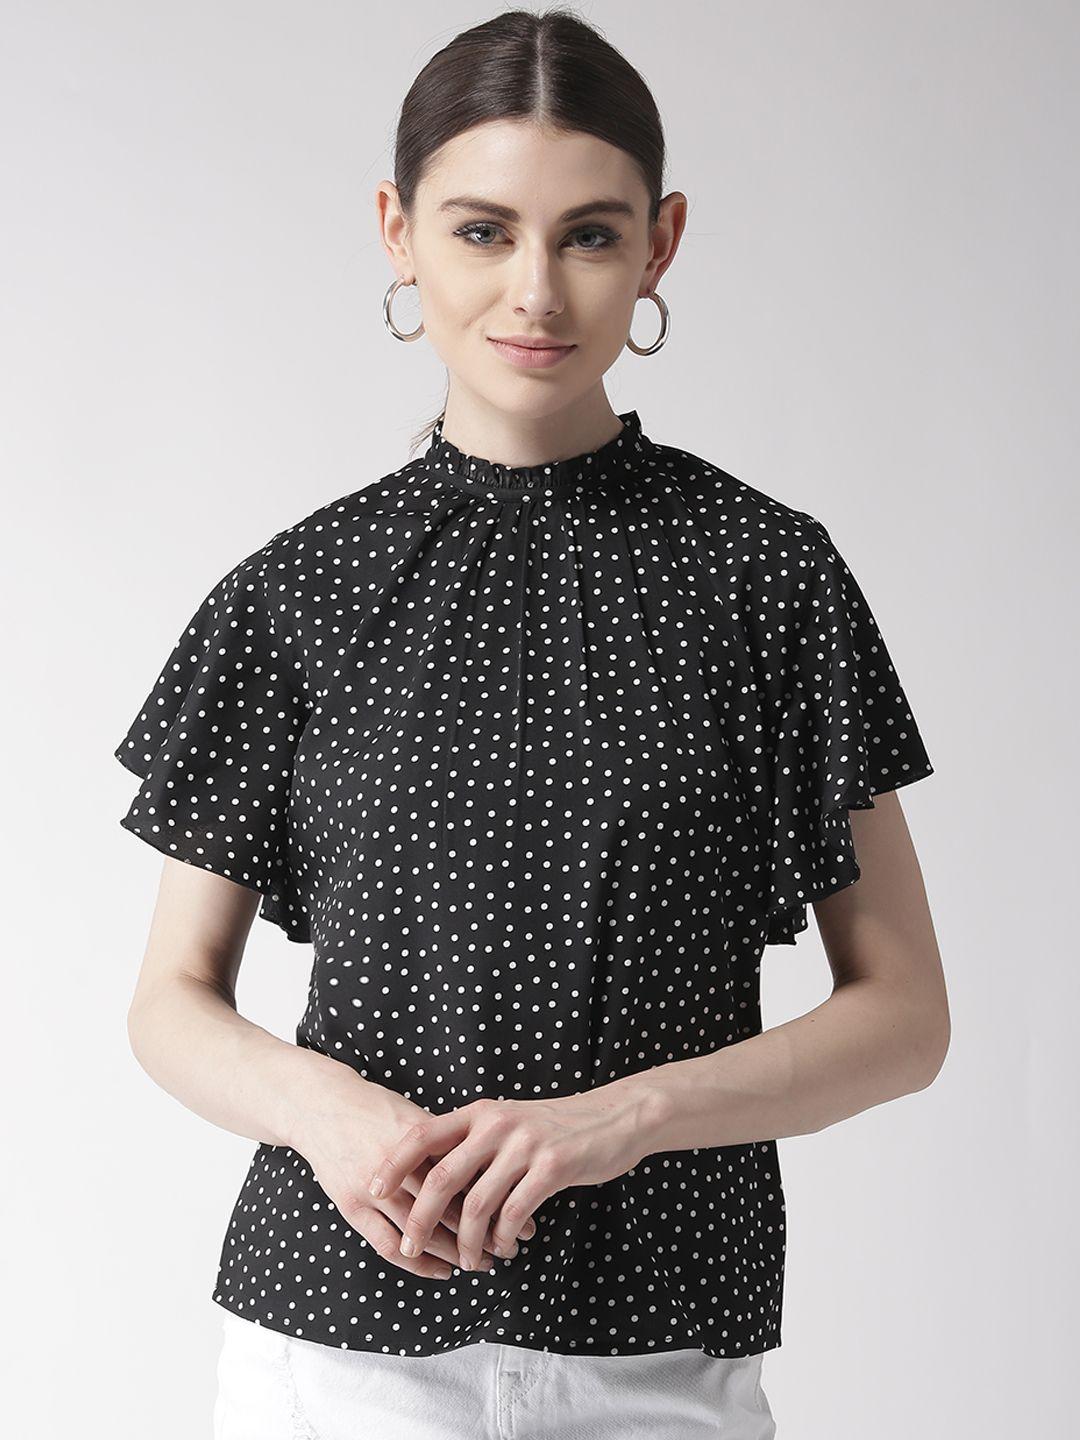 style quotient women black & white polka dot print top